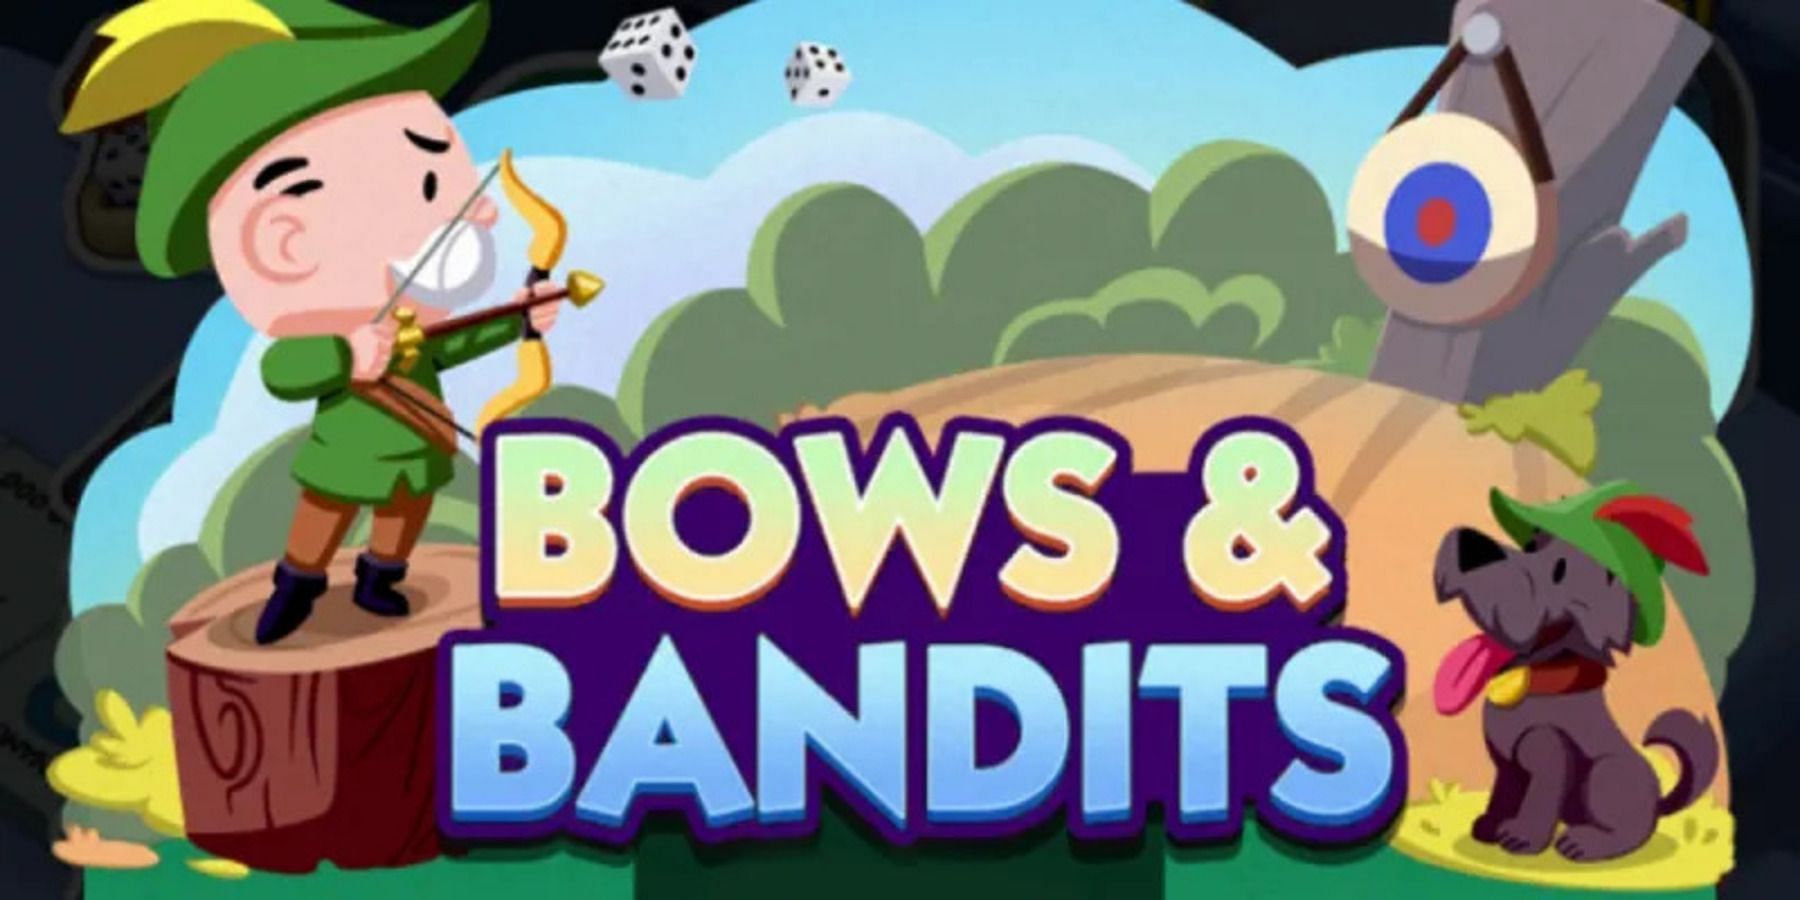 Bows &amp; Bandits event